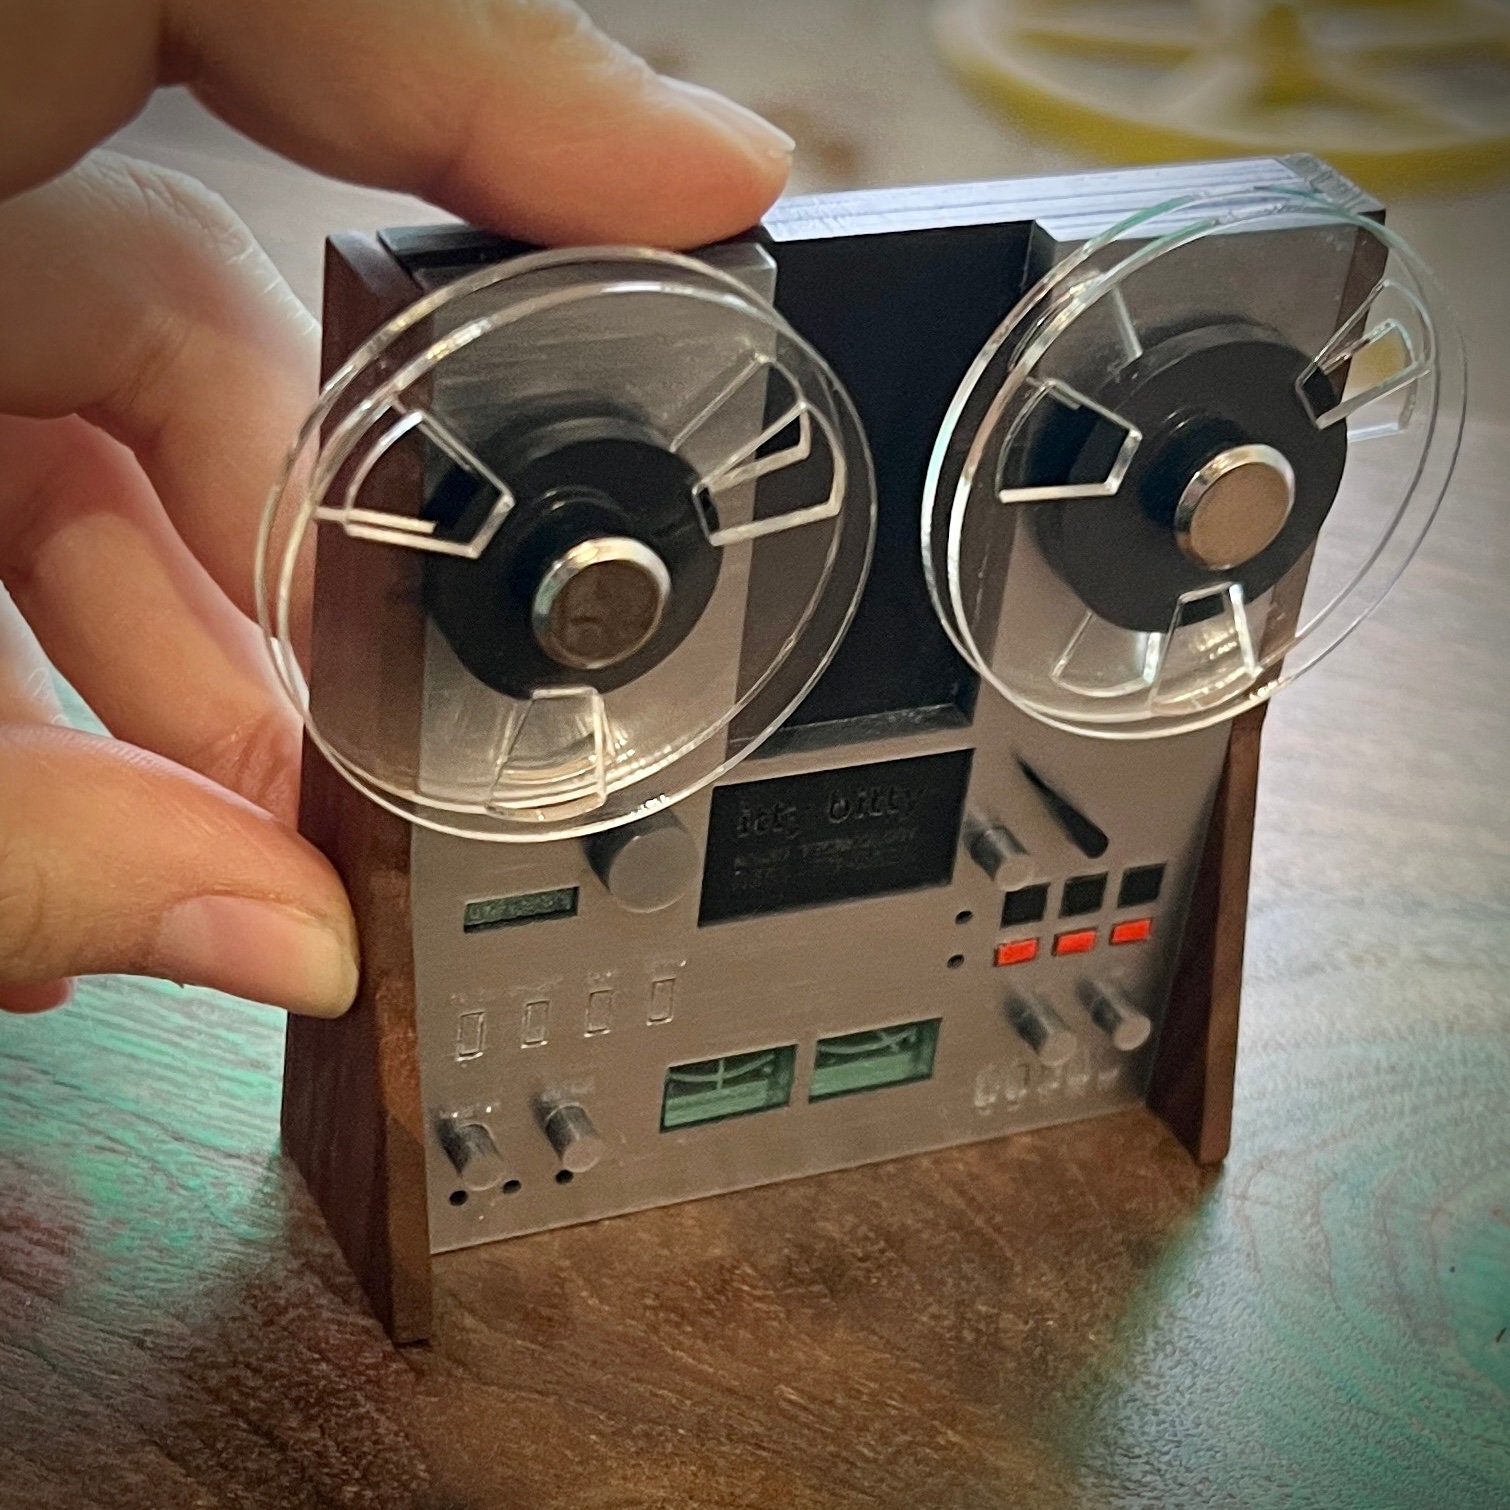 Akai GX-747 Reel-to-Reel Tape Recorder 3D Render